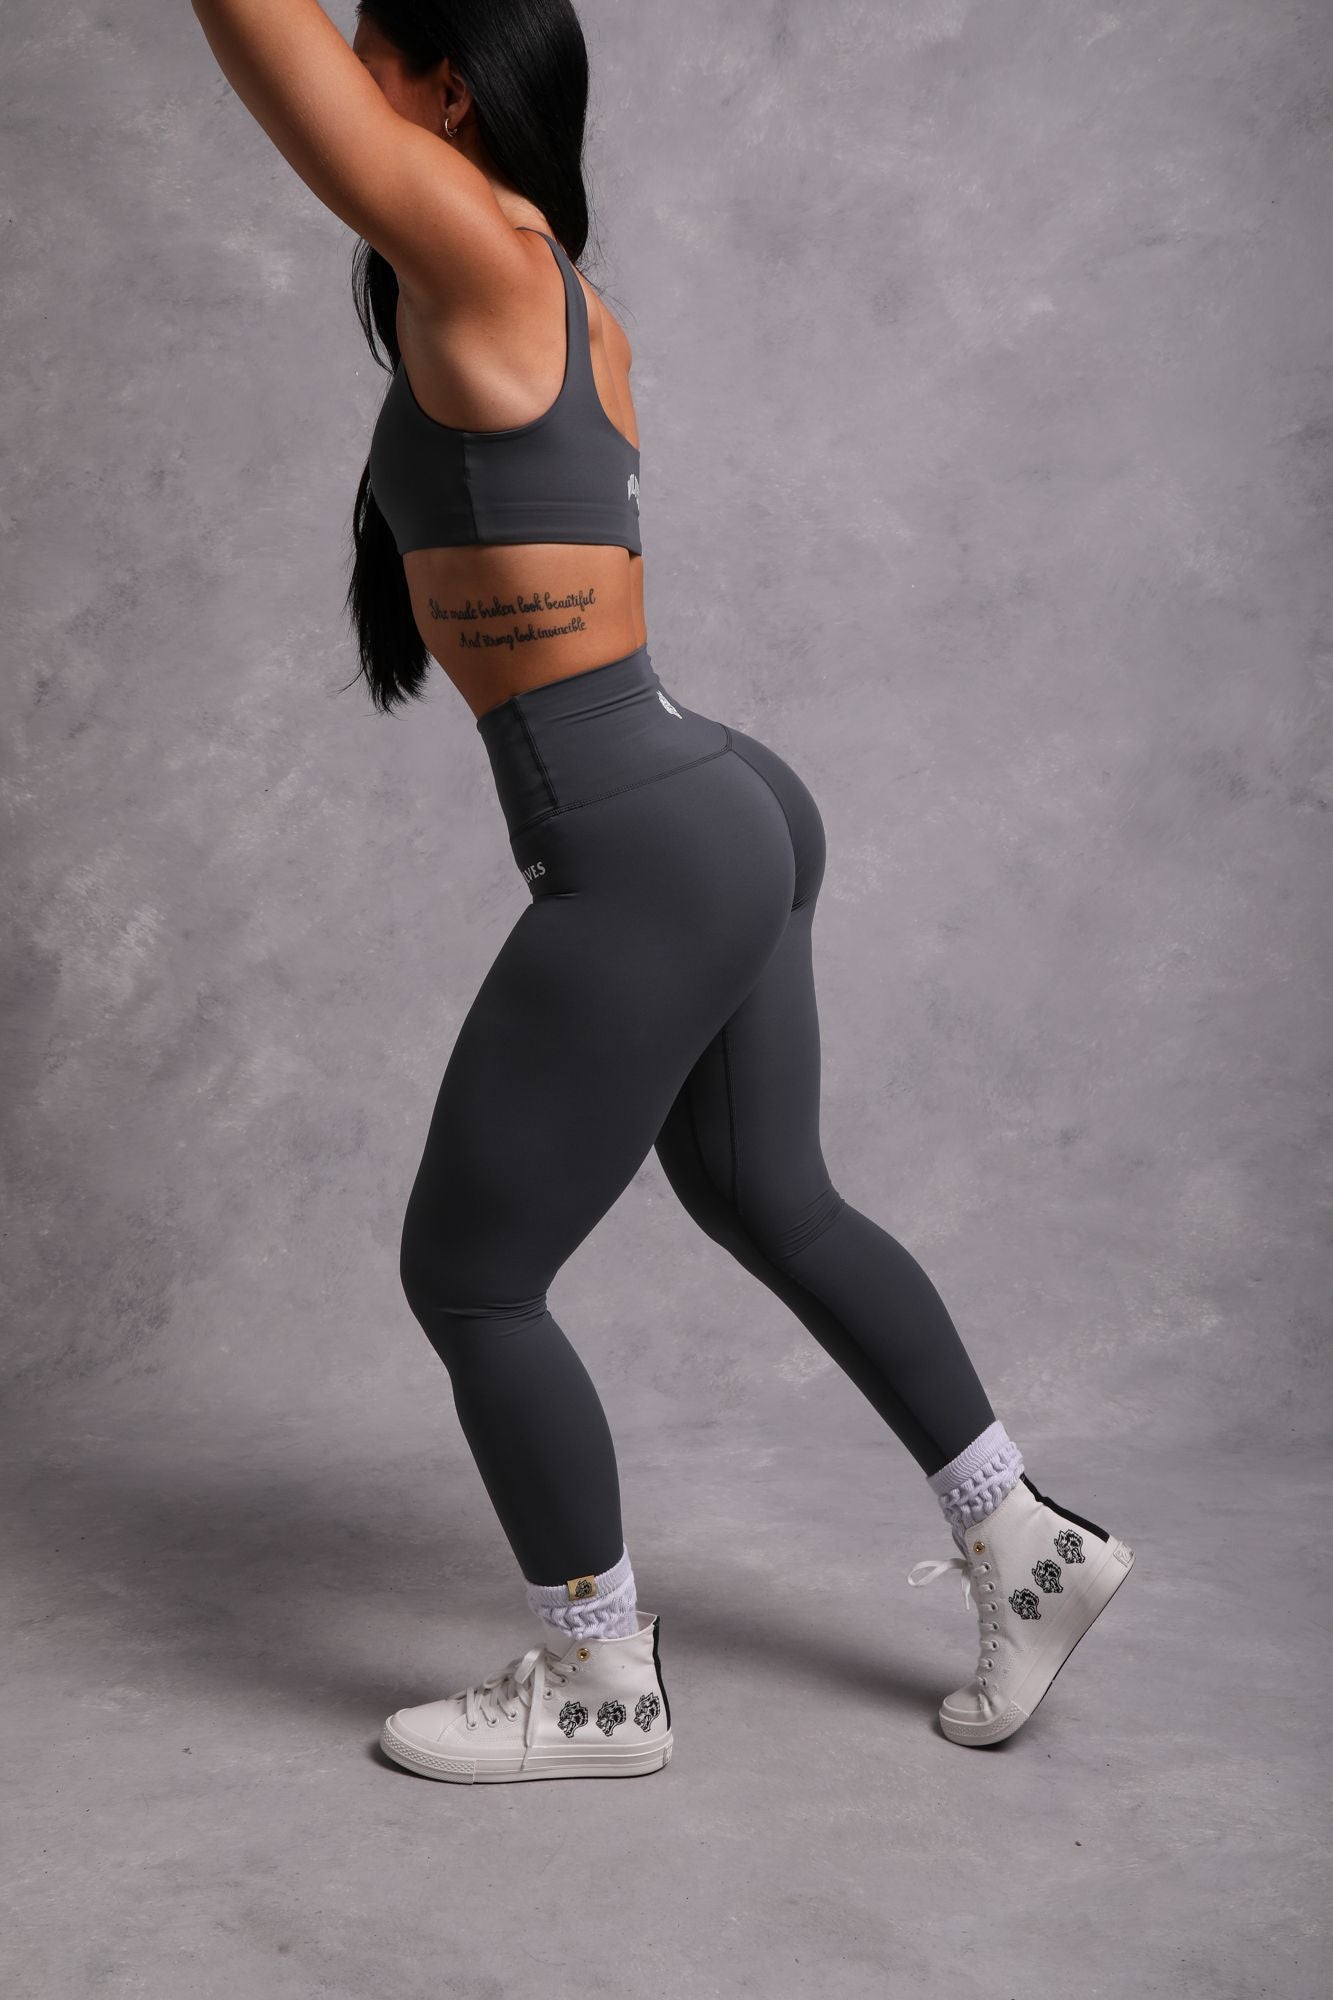 Darc Sport leggings - Athletic apparel